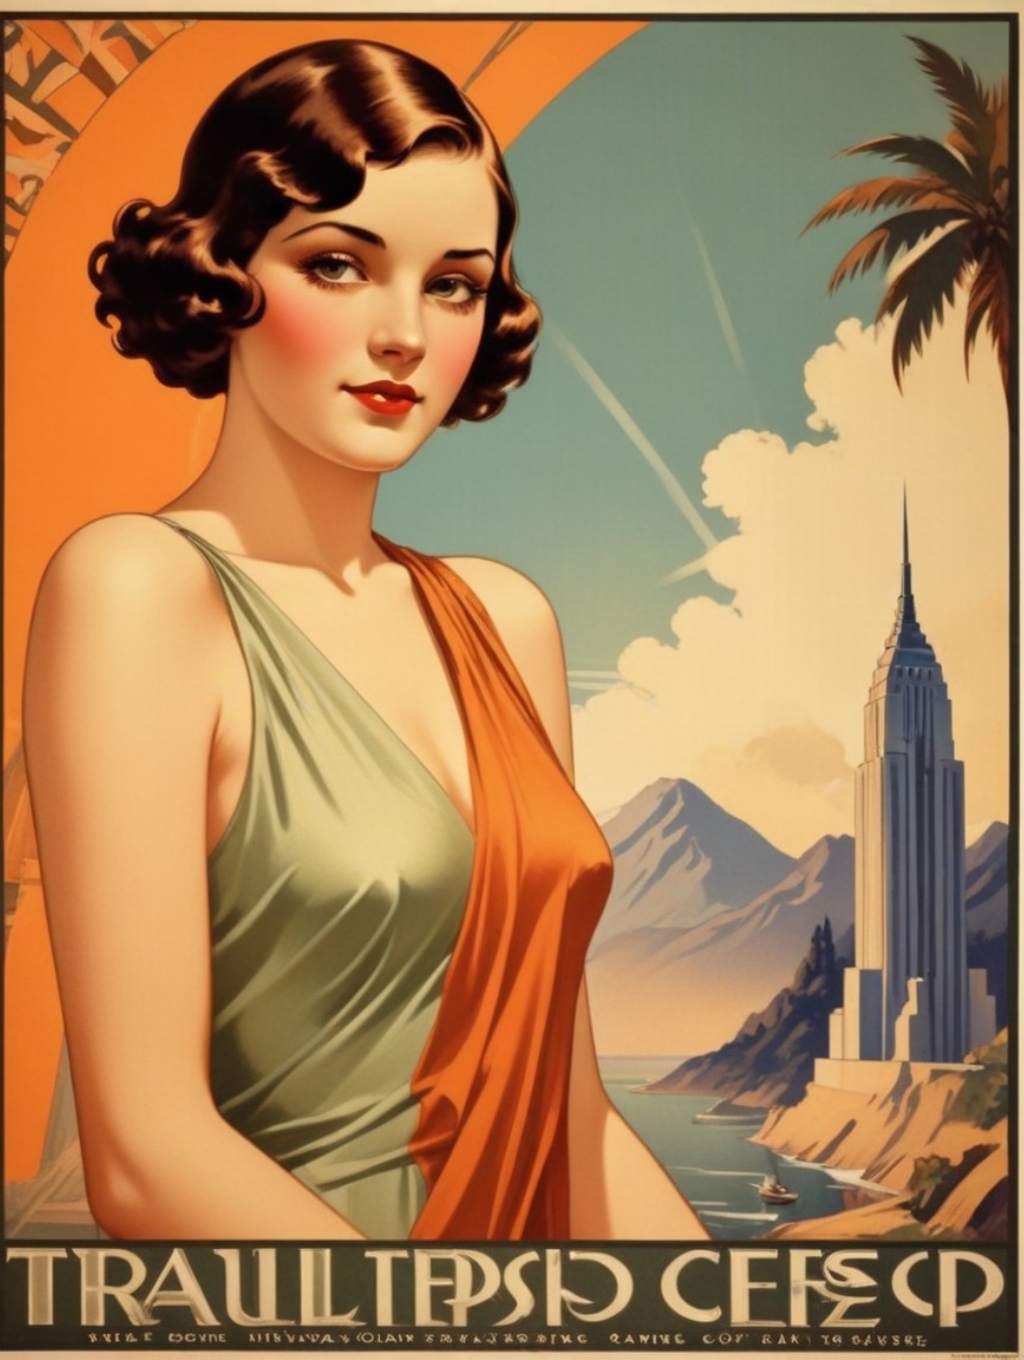 Art Deco Travel Posters Women: Image Frames & Self-Portraits-Theme:5